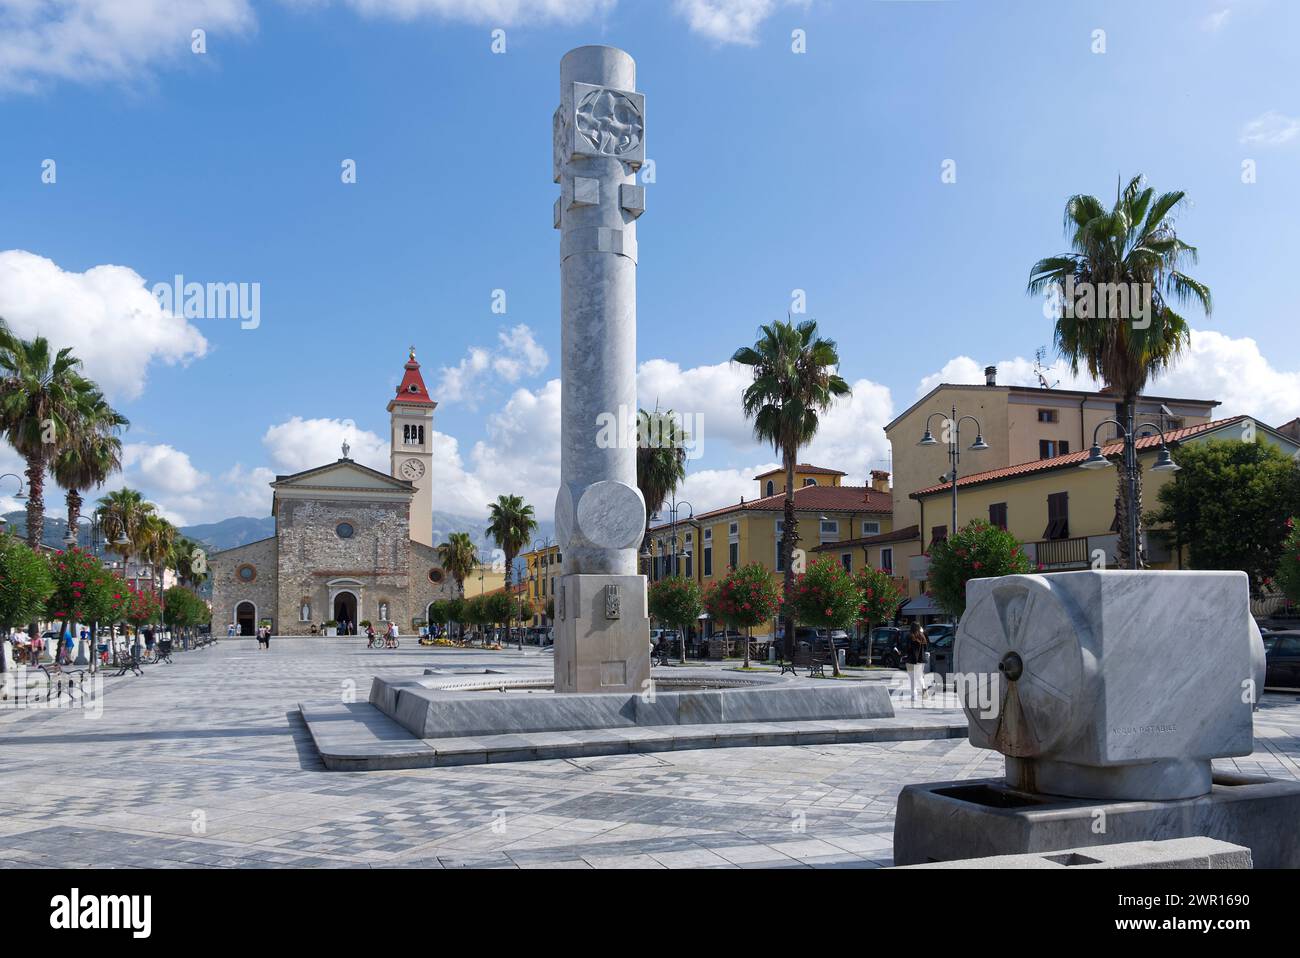 The Sacra Familia church in the Menconi square of the town of Marina di Carrara in Tuscany, Italy Stock Photo